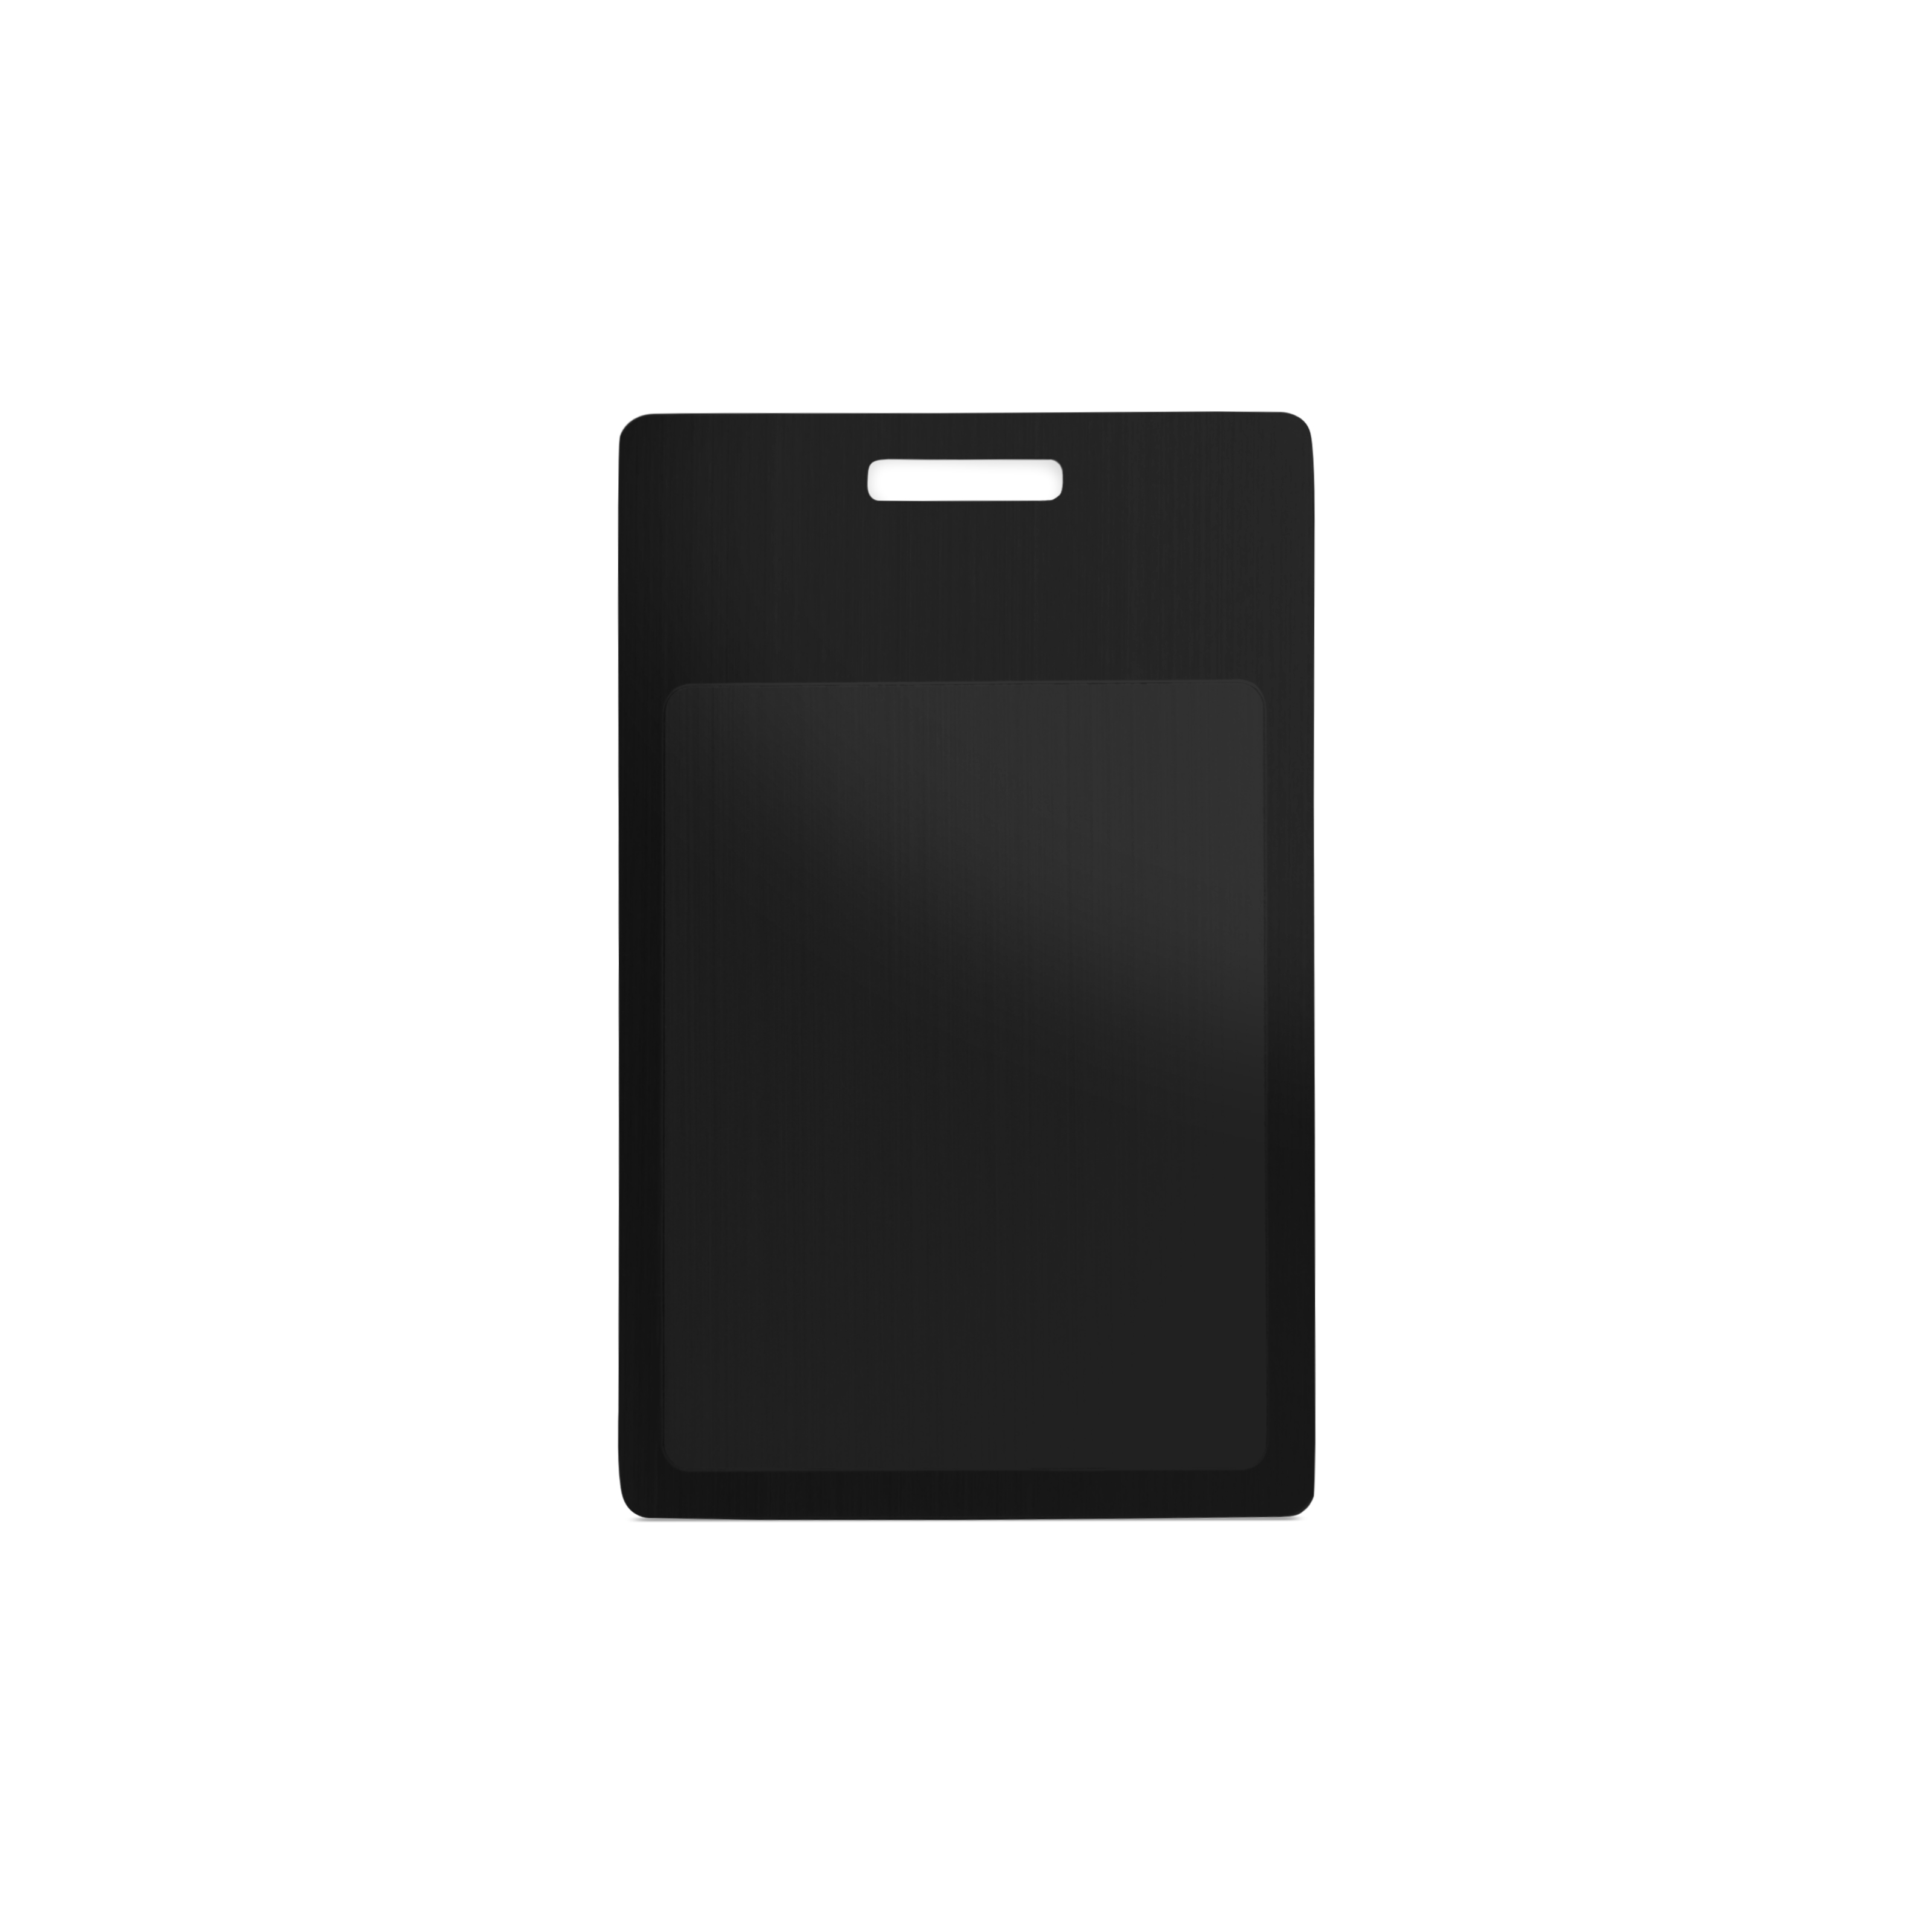 NFC card metal - 85,6 x 54 mm - NTAG213 - 180 bytes - black - portrait format with slot